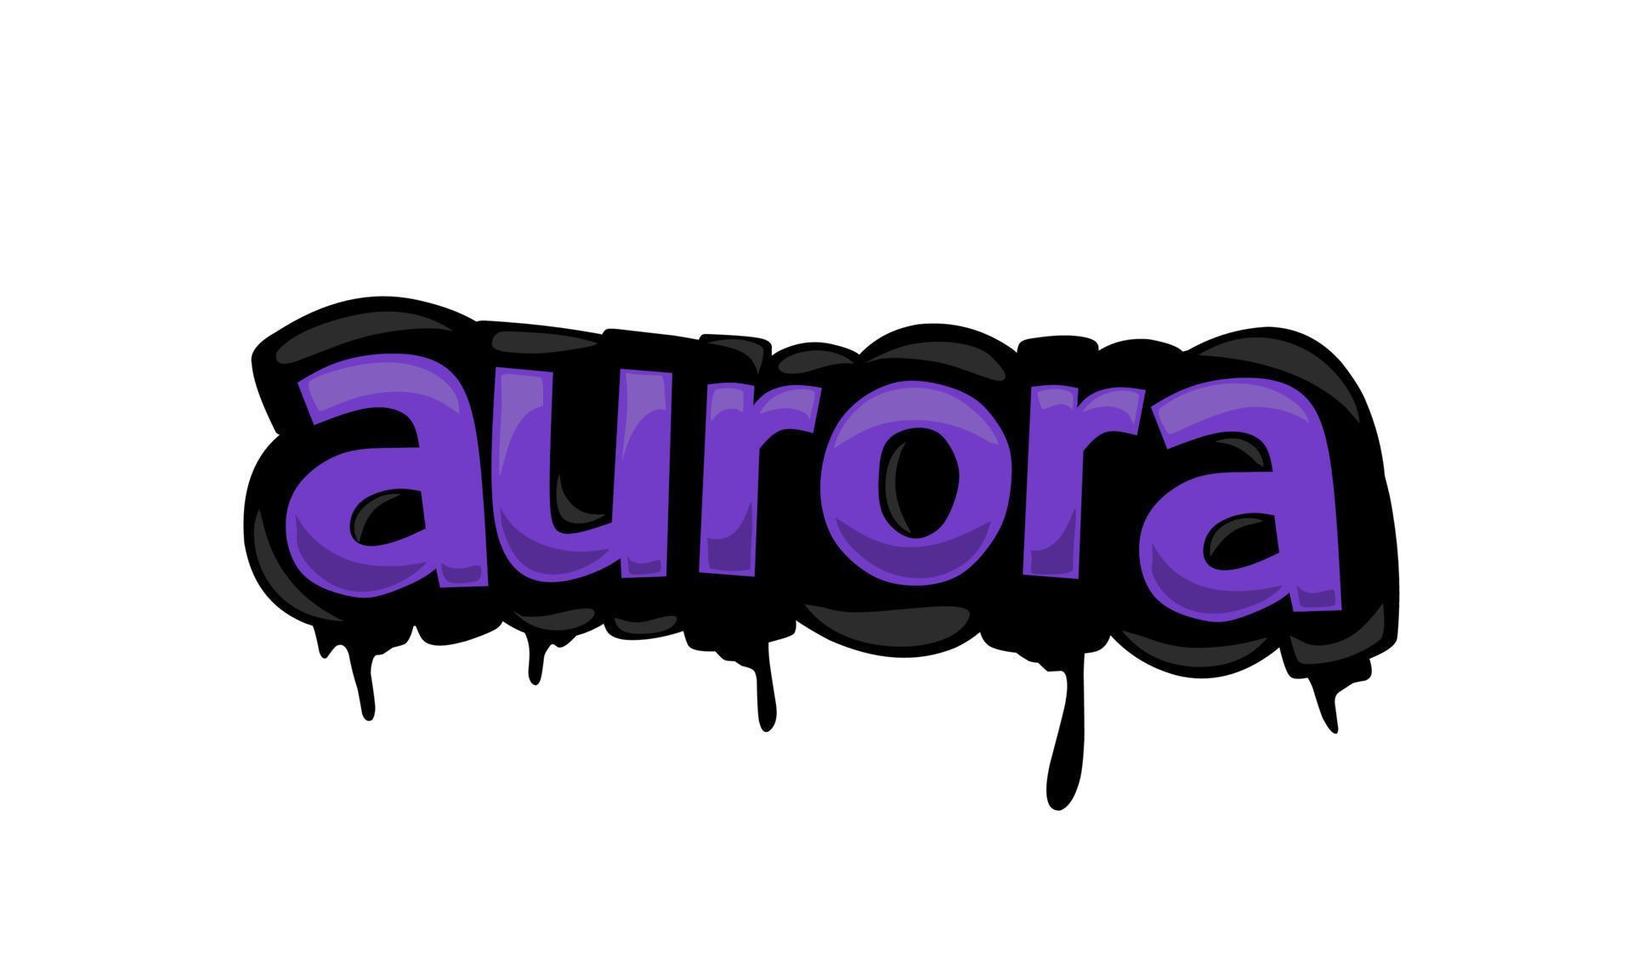 AURORA writing vector design on white background